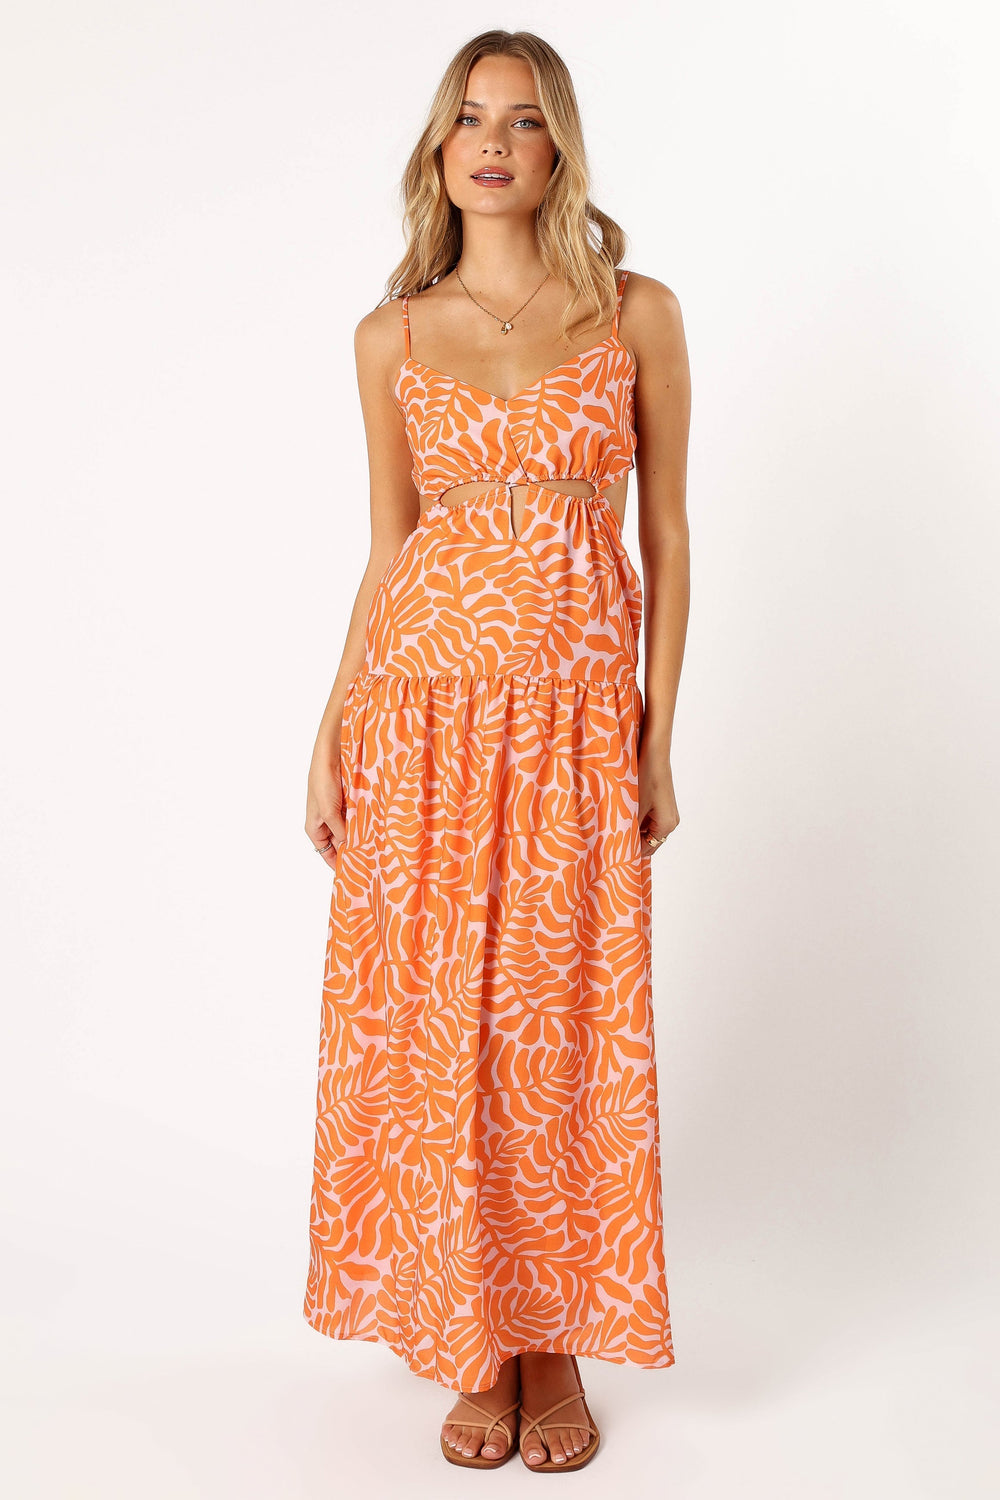 Petal and Pup USA DRESSES Dalton Cut Out Maxi Dress - Orange Print